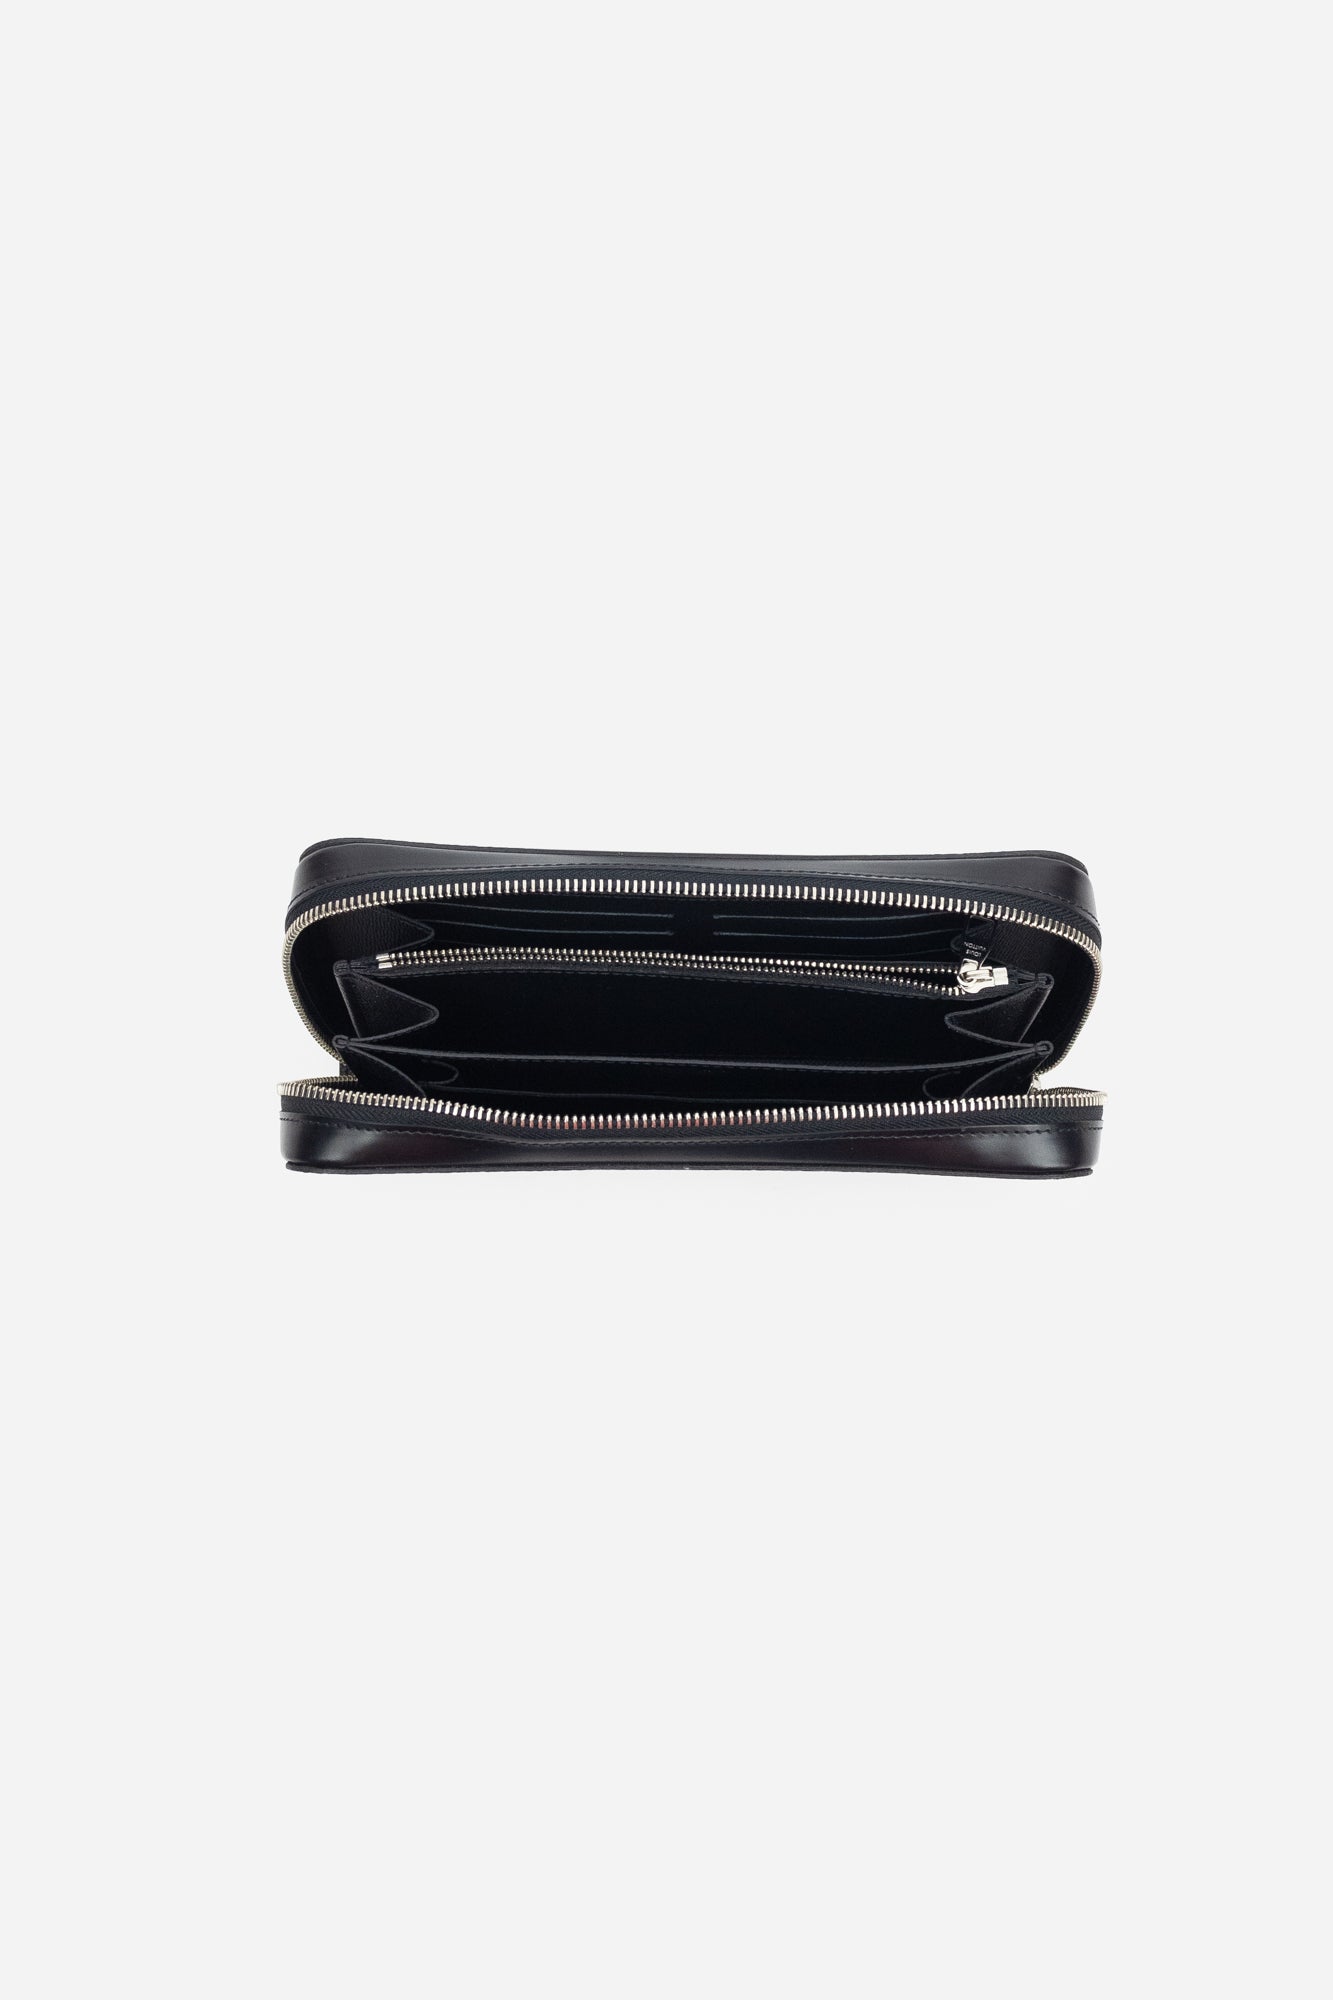 Damier Graphite Zippy XL Large Zipped Wallet